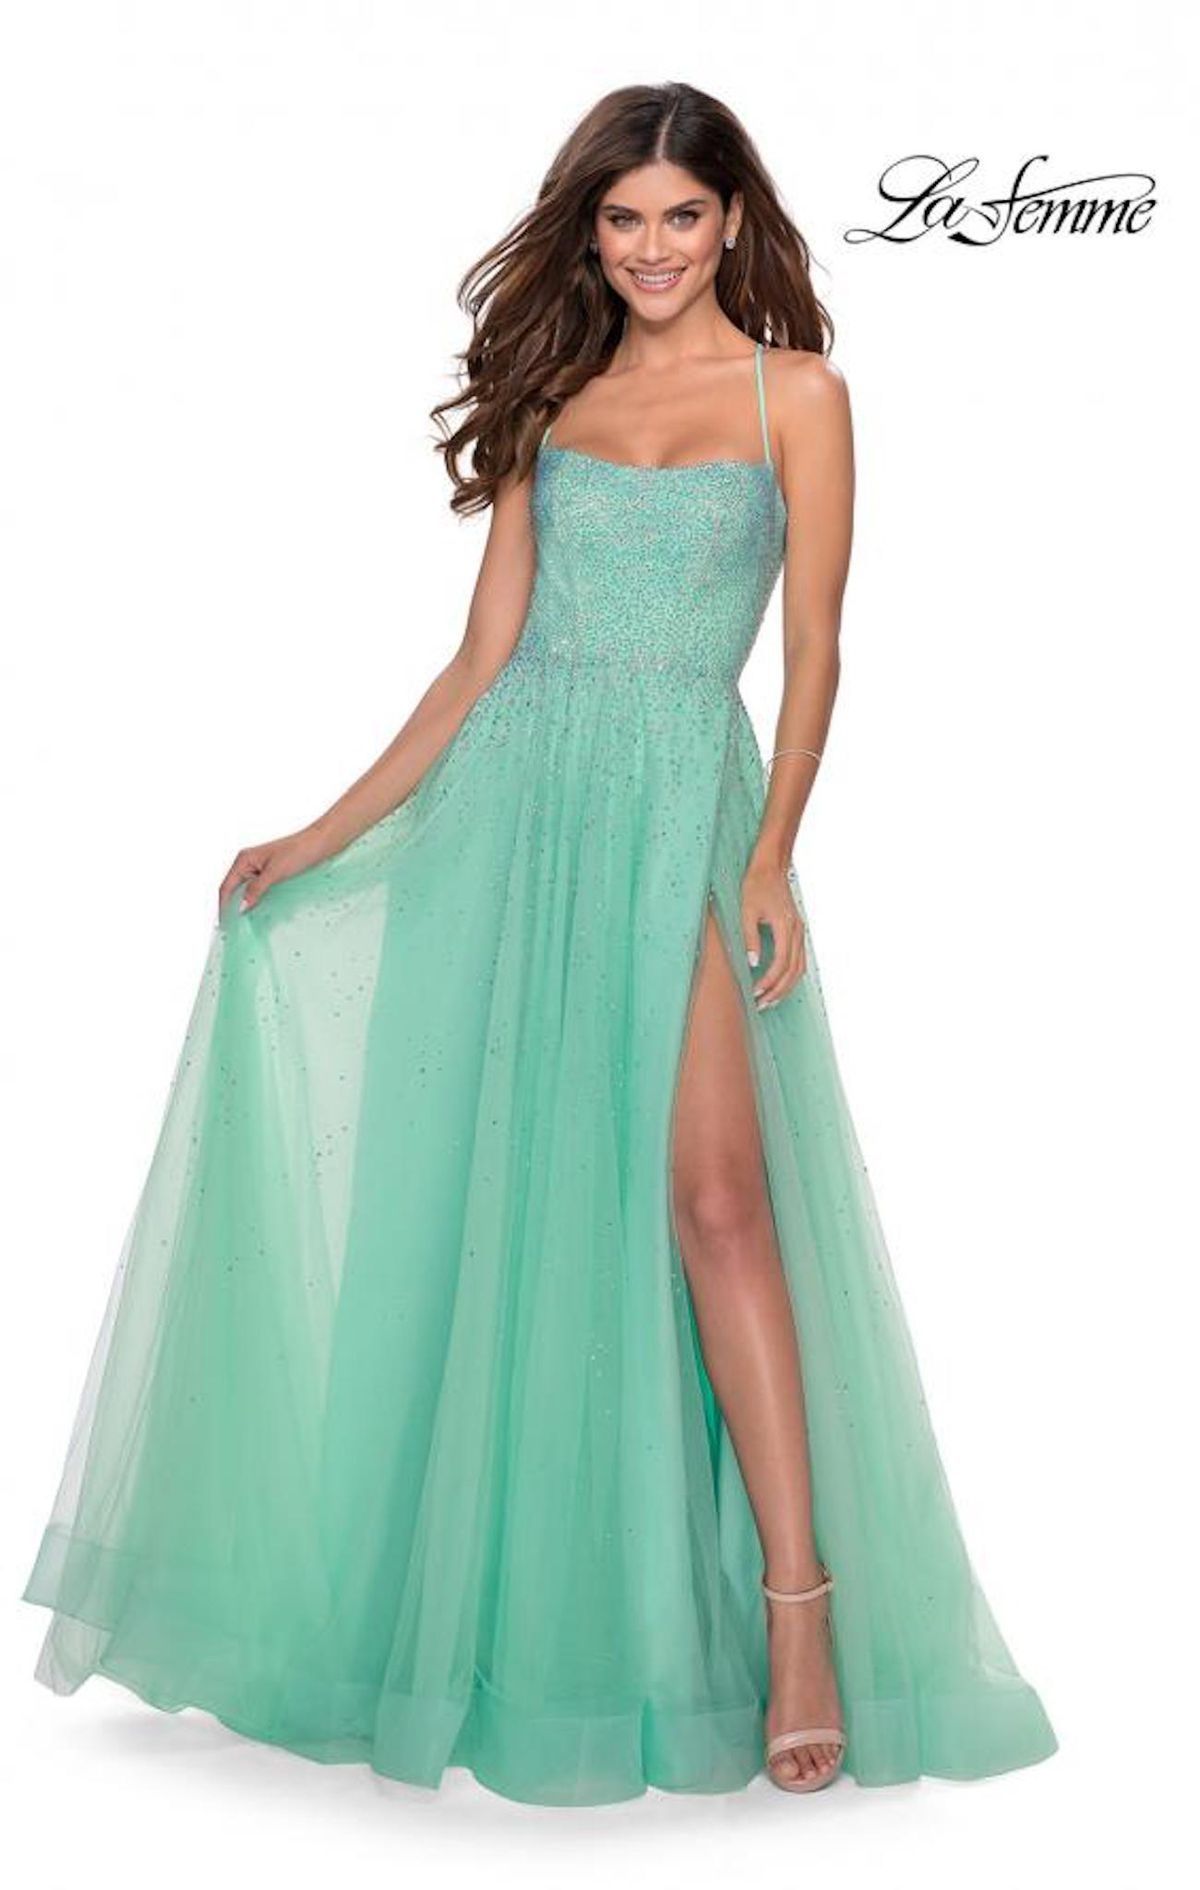 Style Brie La Femme Size 6 Prom Light Green Side Slit Dress on Queenly